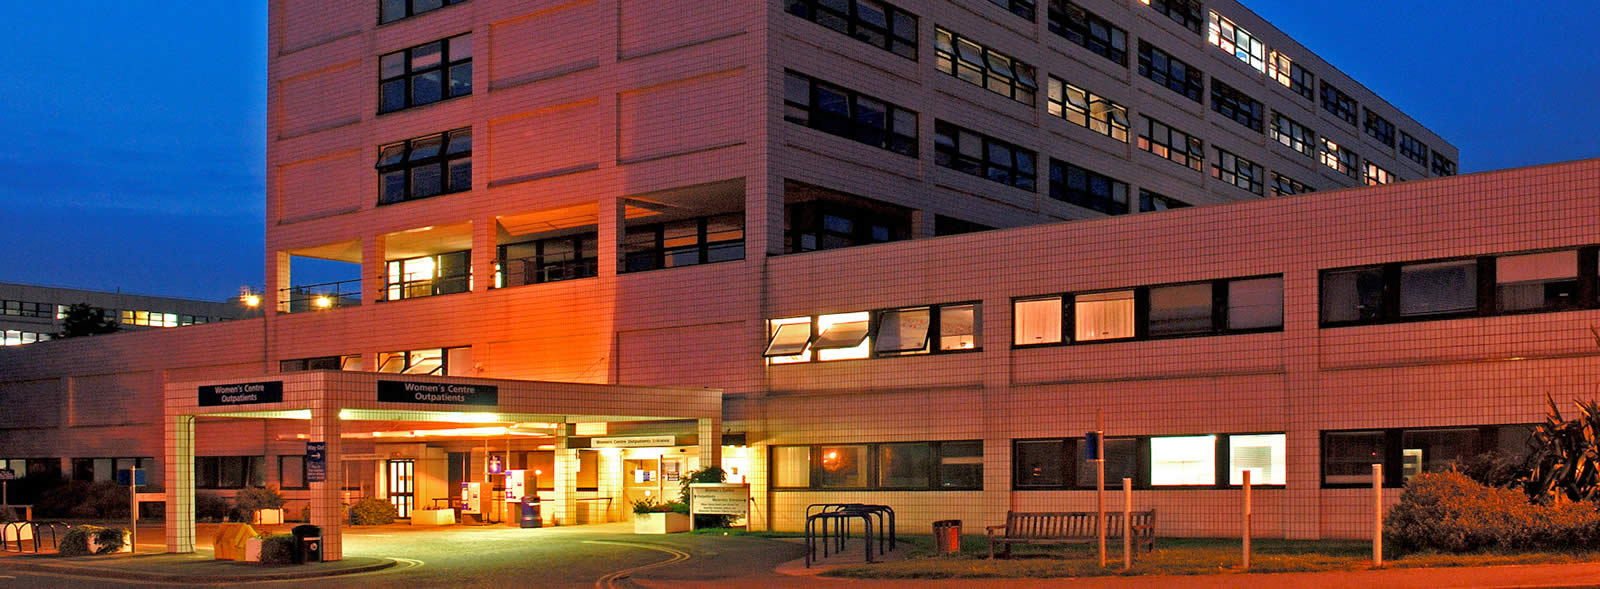 John Radcliffe Hospital Women's Centre at night